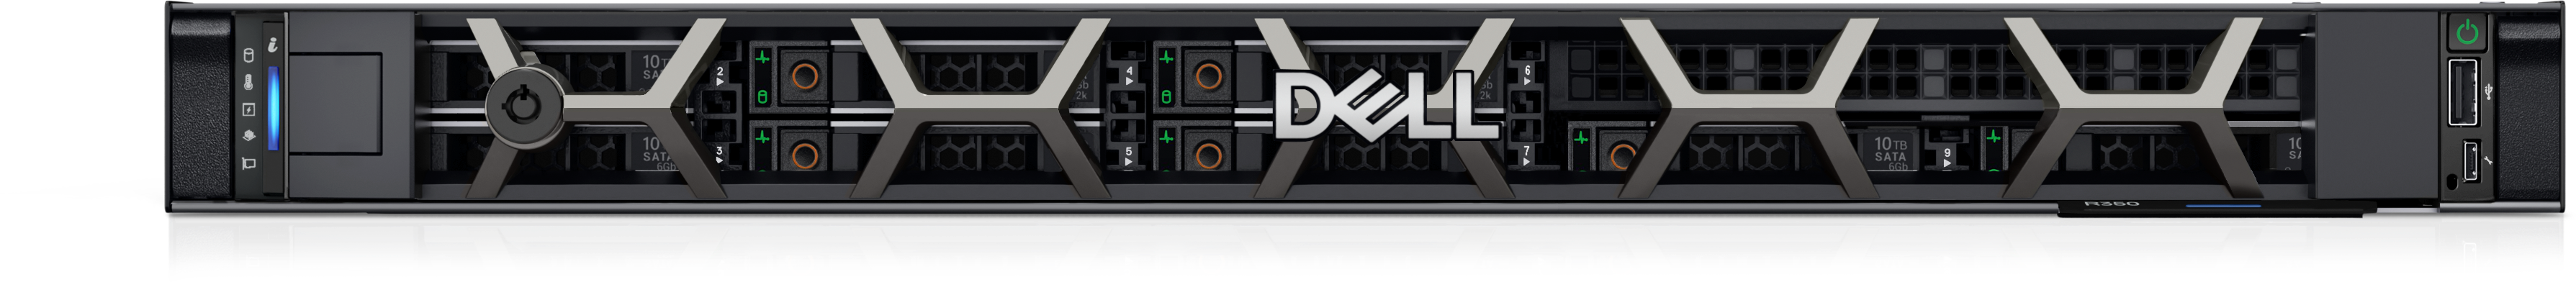 PowerEdge R350 Rack Server | Dell USA